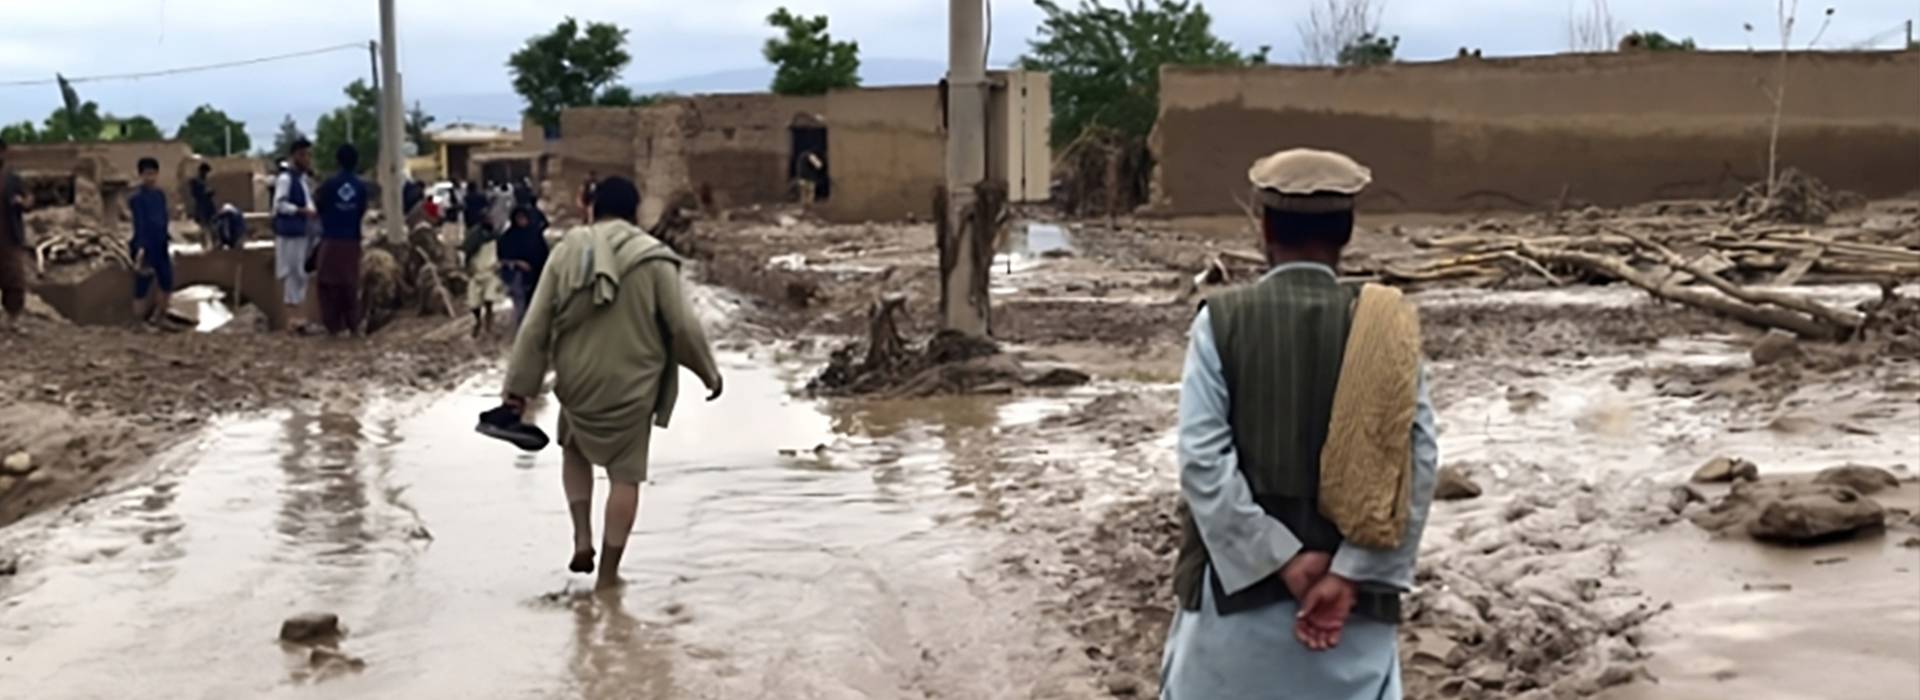 IBC Flash Appeal Responding Afghanistan Floods